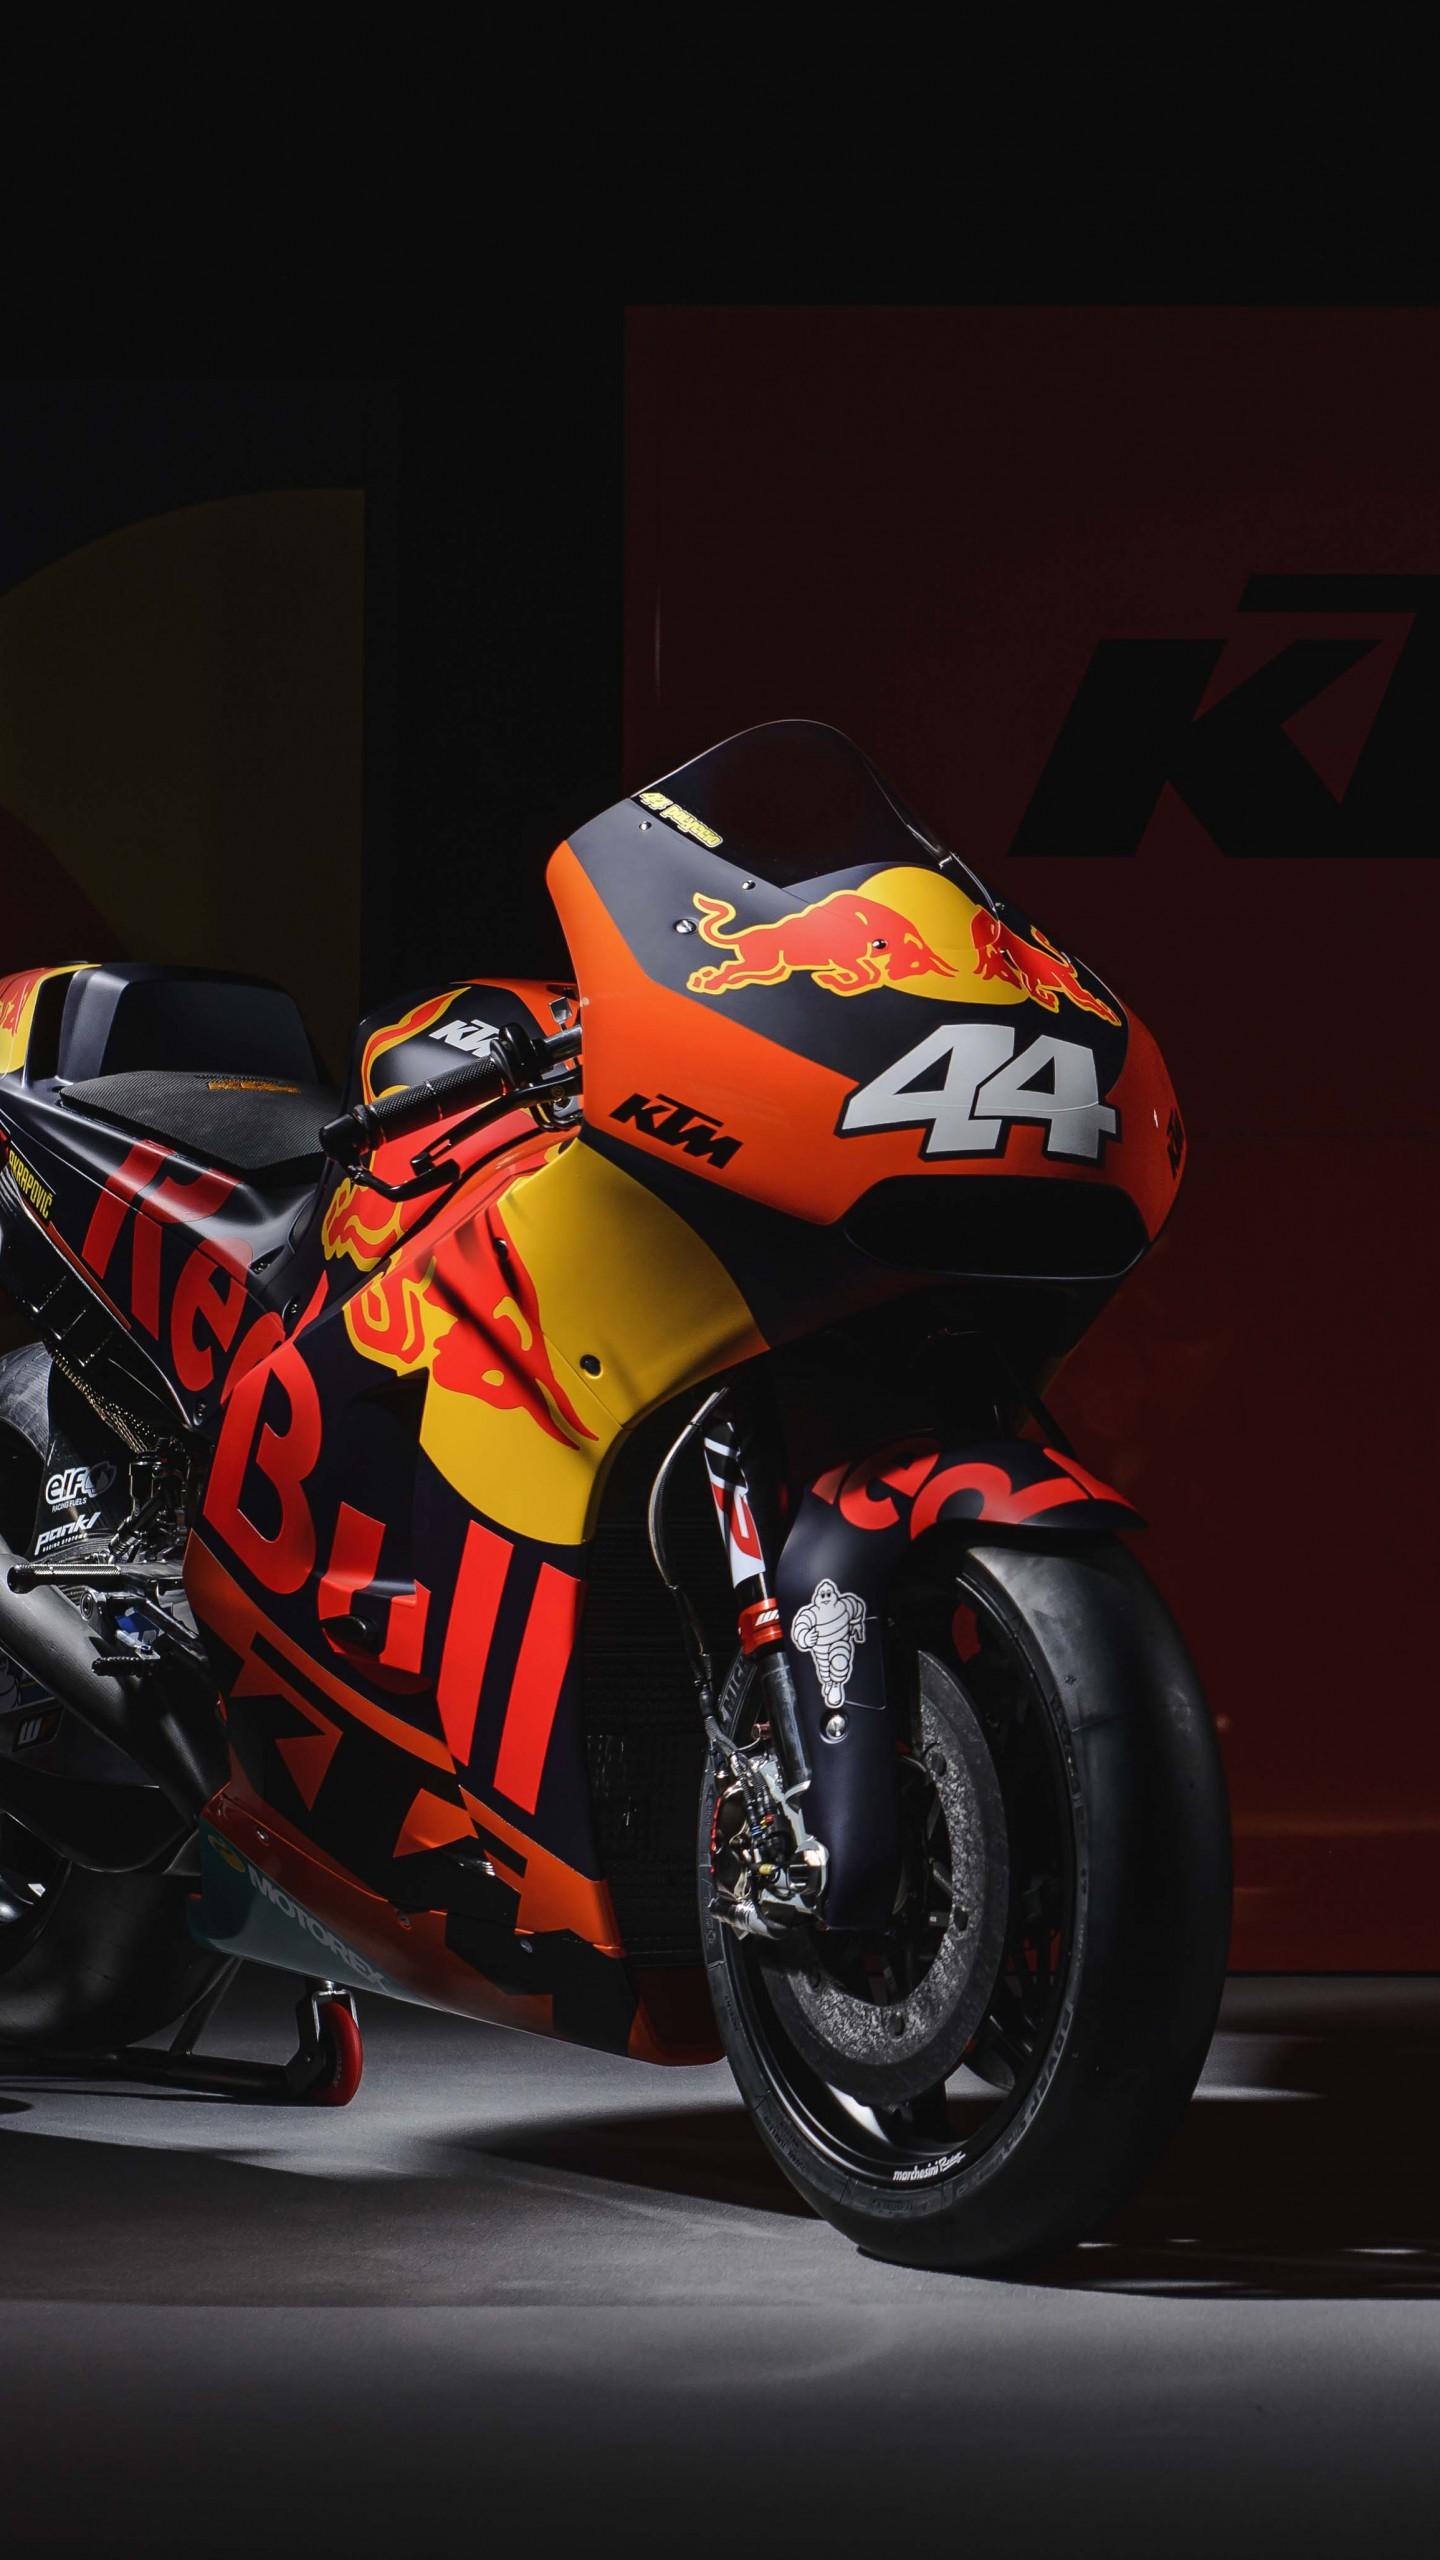 KTM MotoGP Bike iPhone Wallpapers - Wallpaper Cave